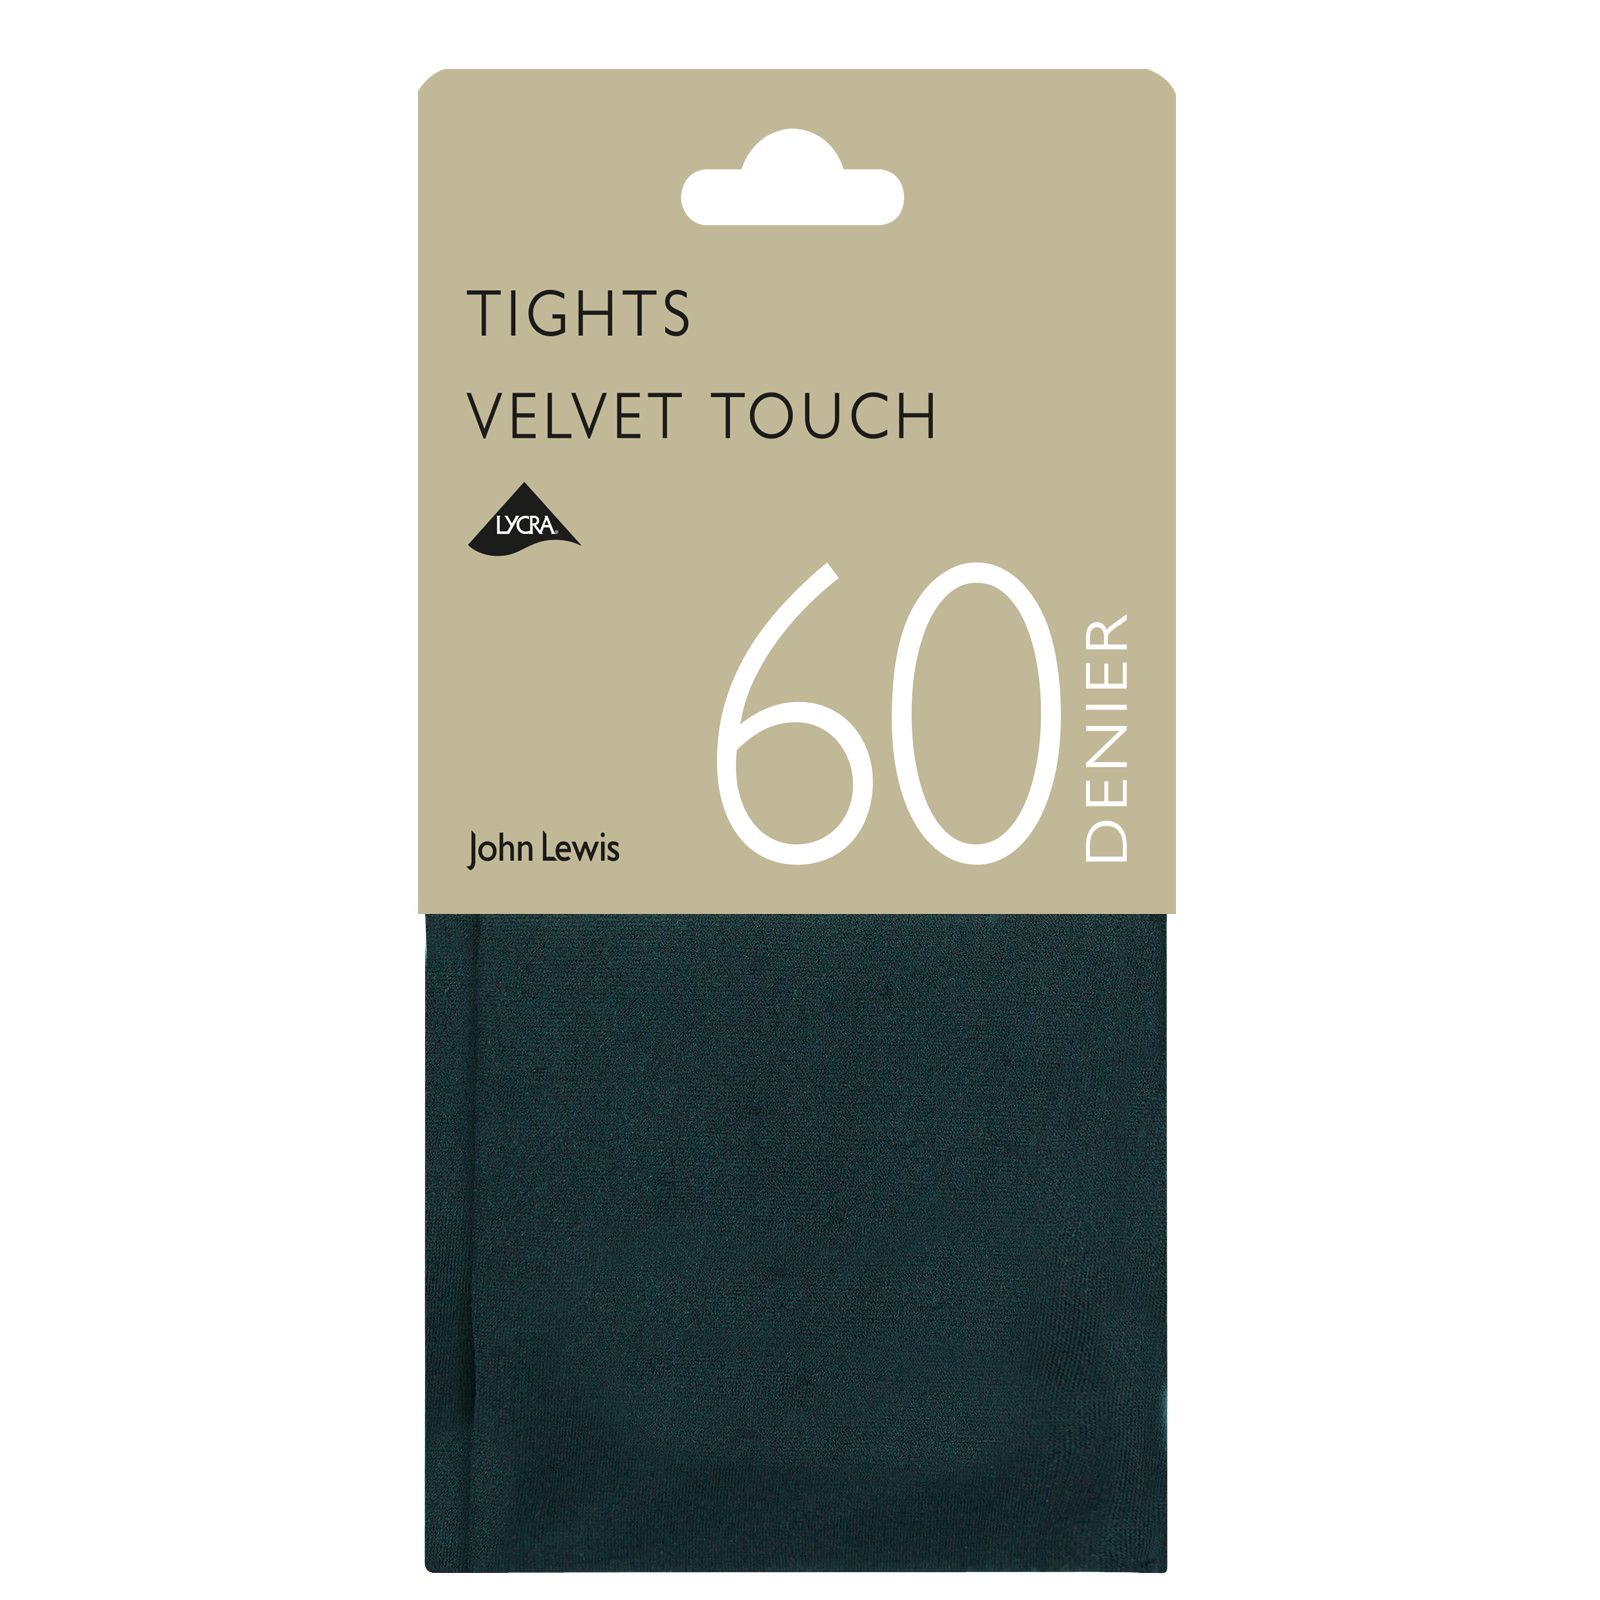 John Lewis & Partners 60 Denier Velvet Touch Opaque Tights, Green, L